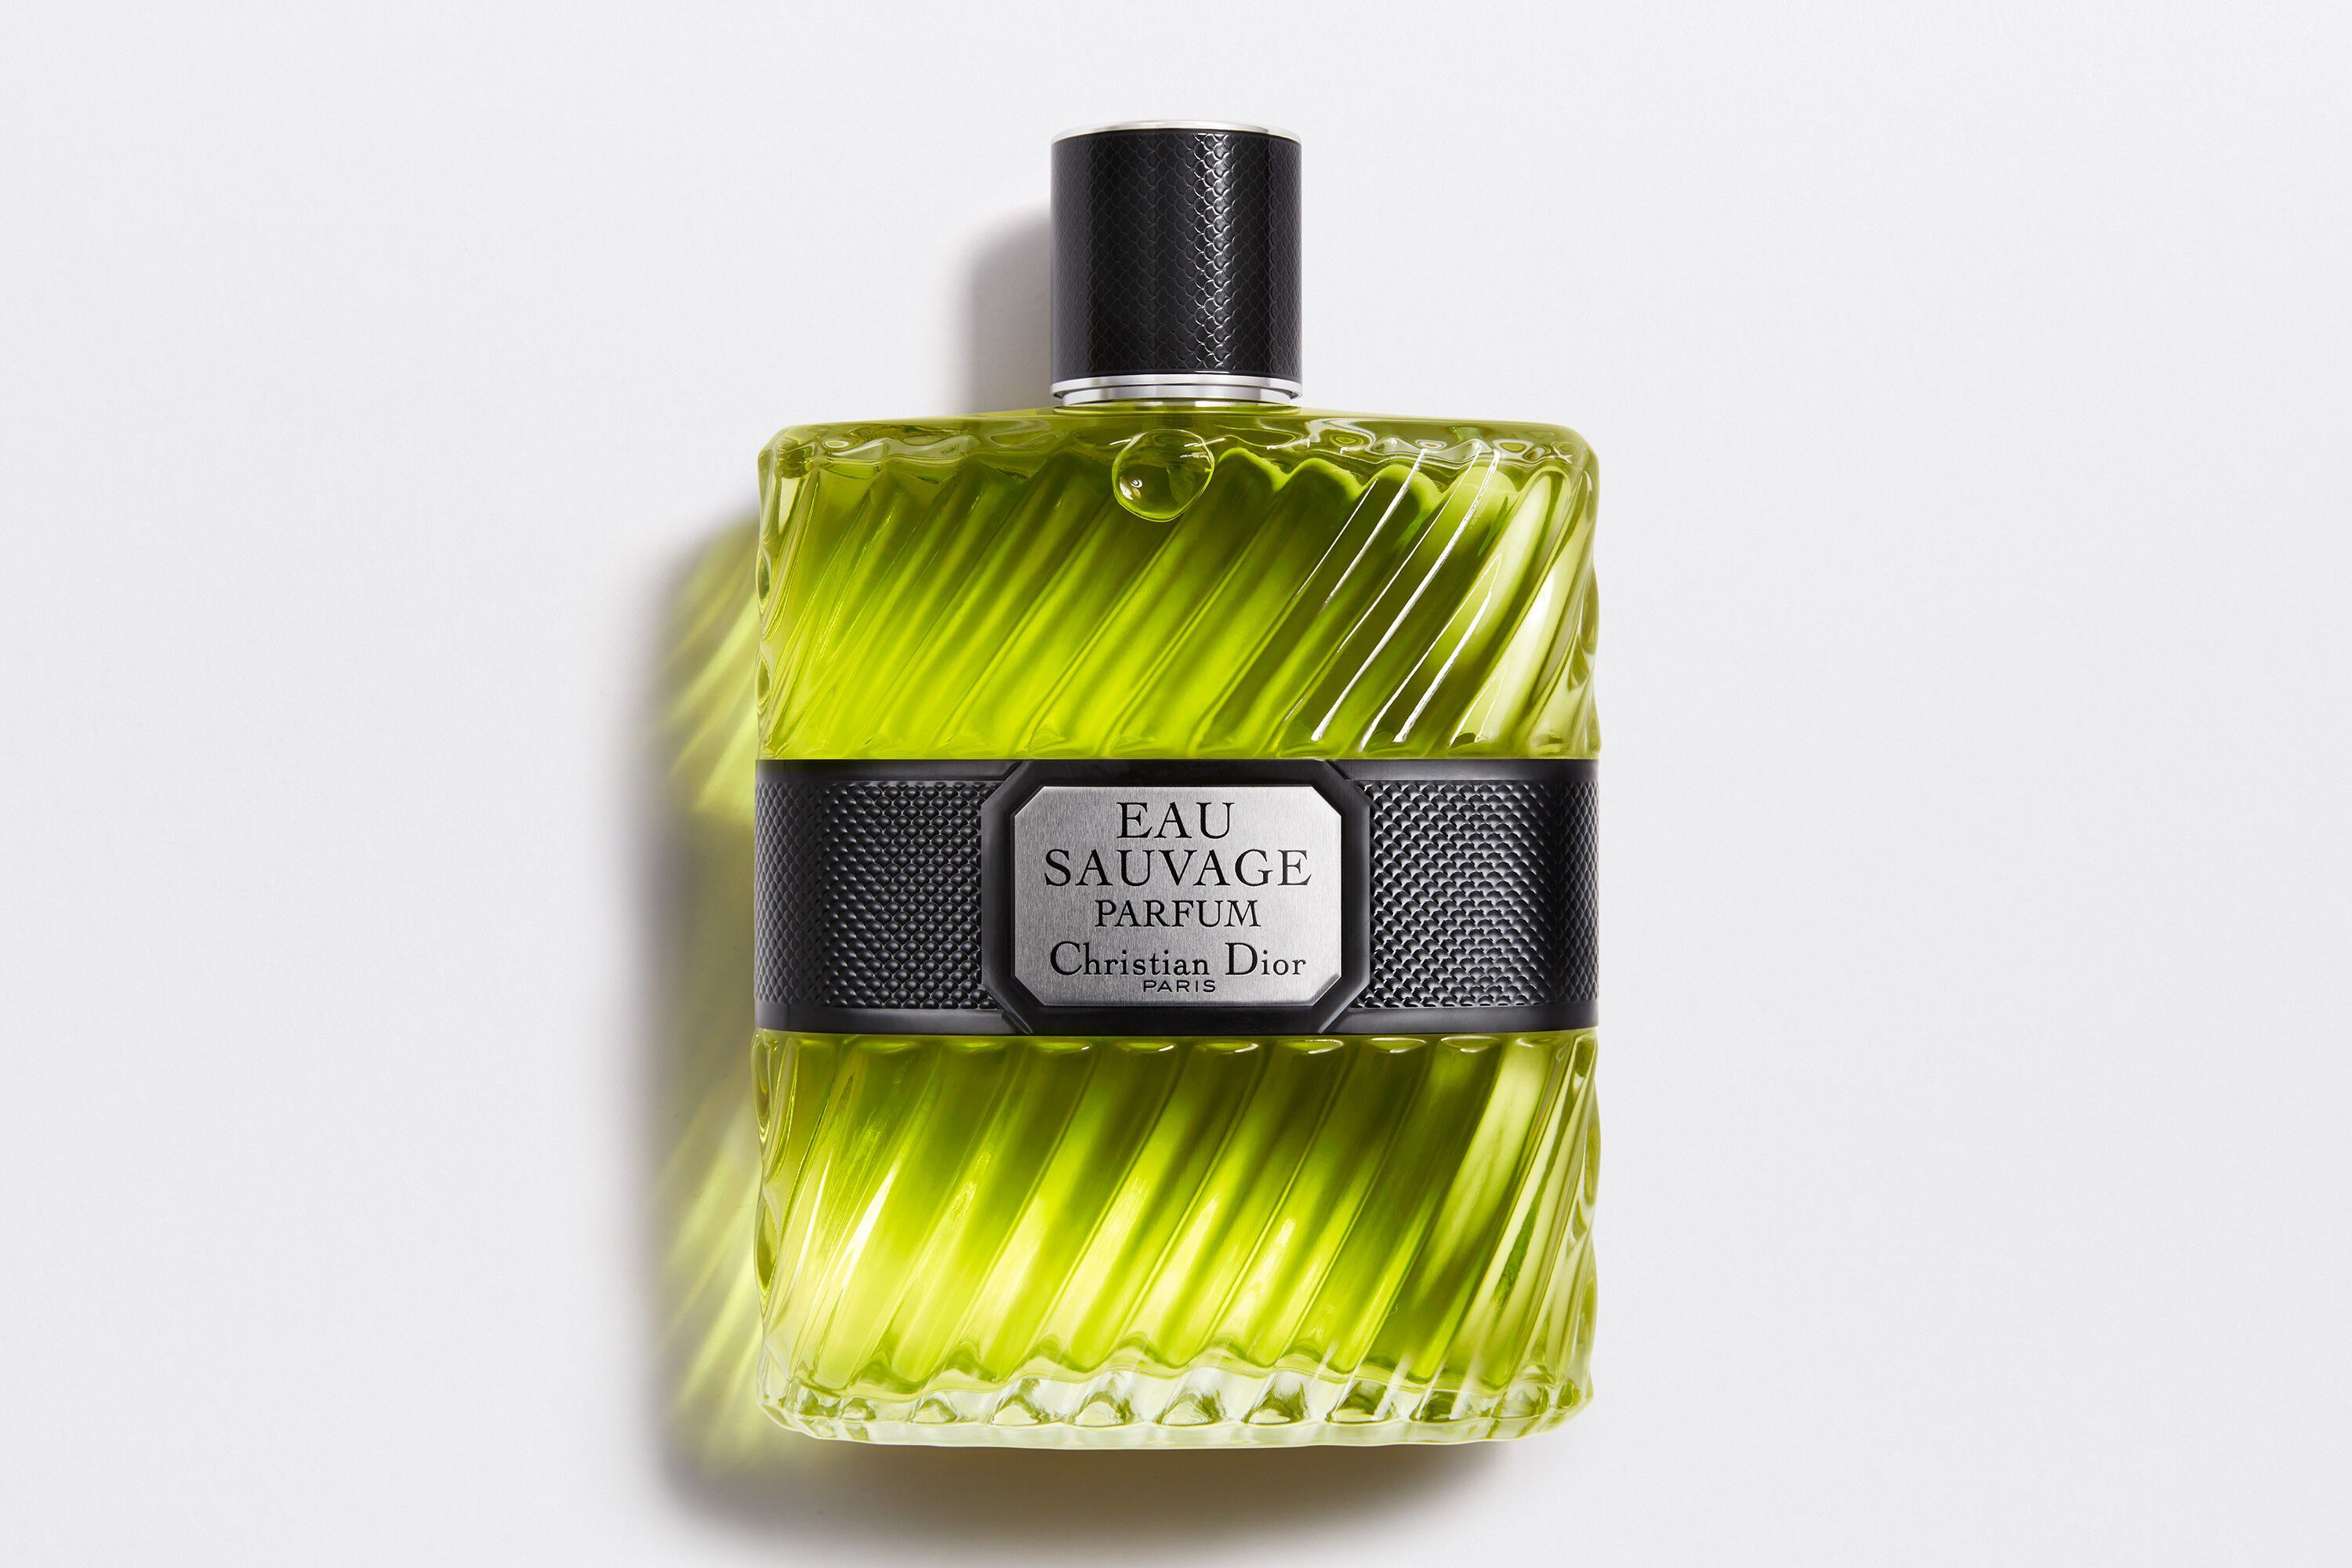 Christian Dior (Perfumes) 1990 Eau Sauvage — Perfumes